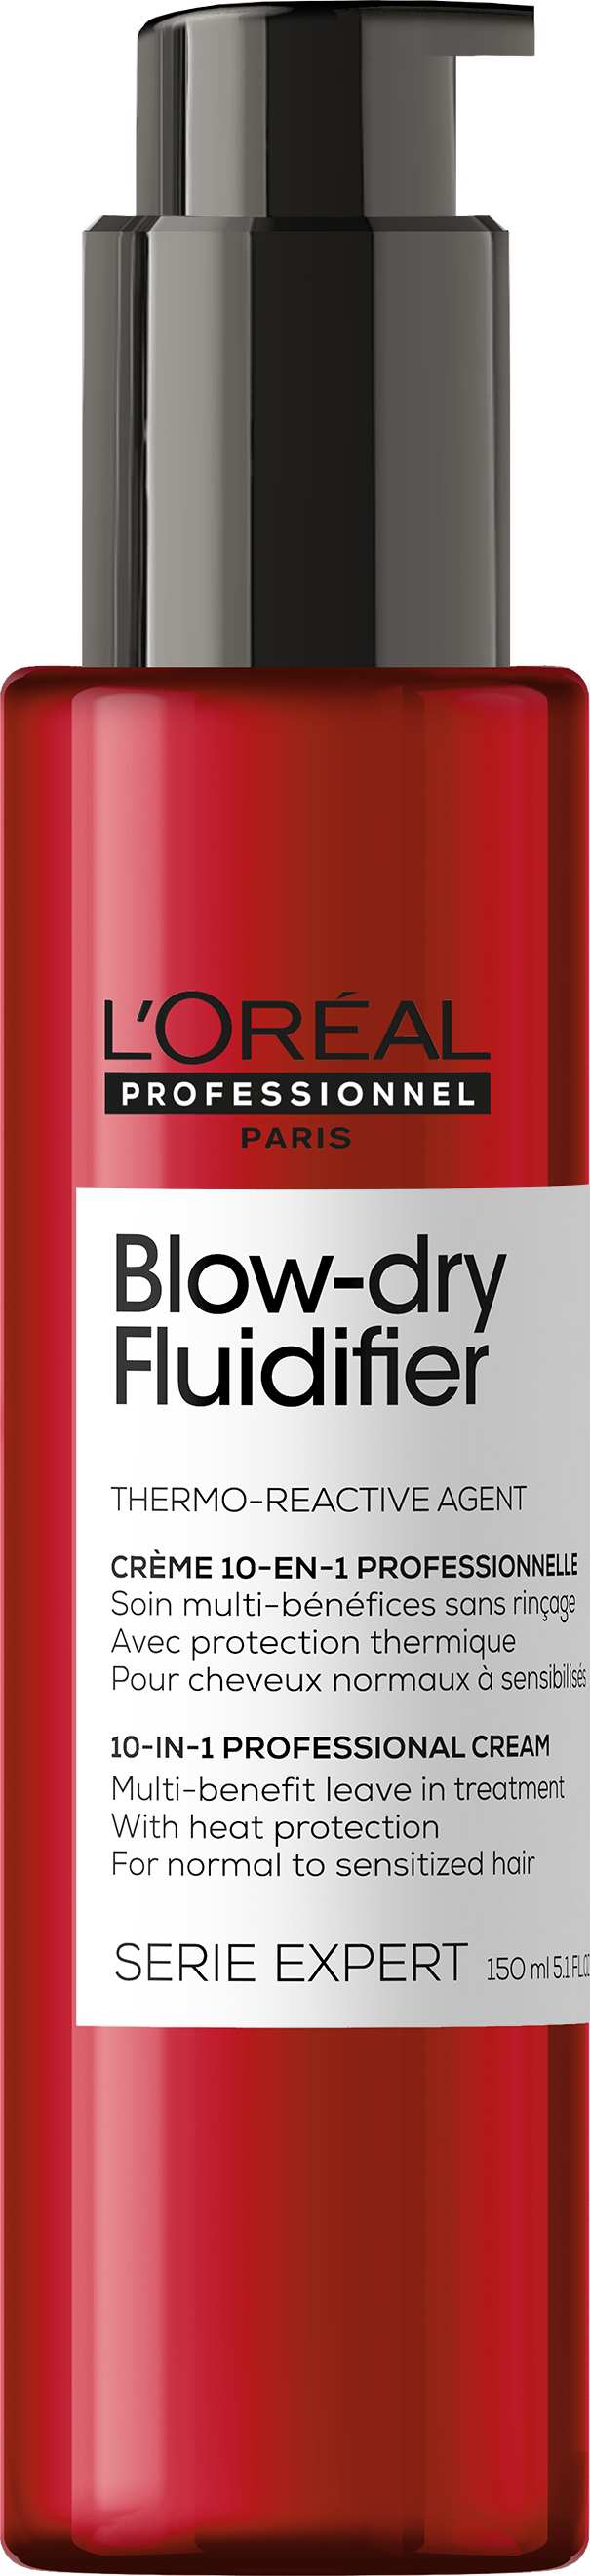 Blow Dry Fluidifier